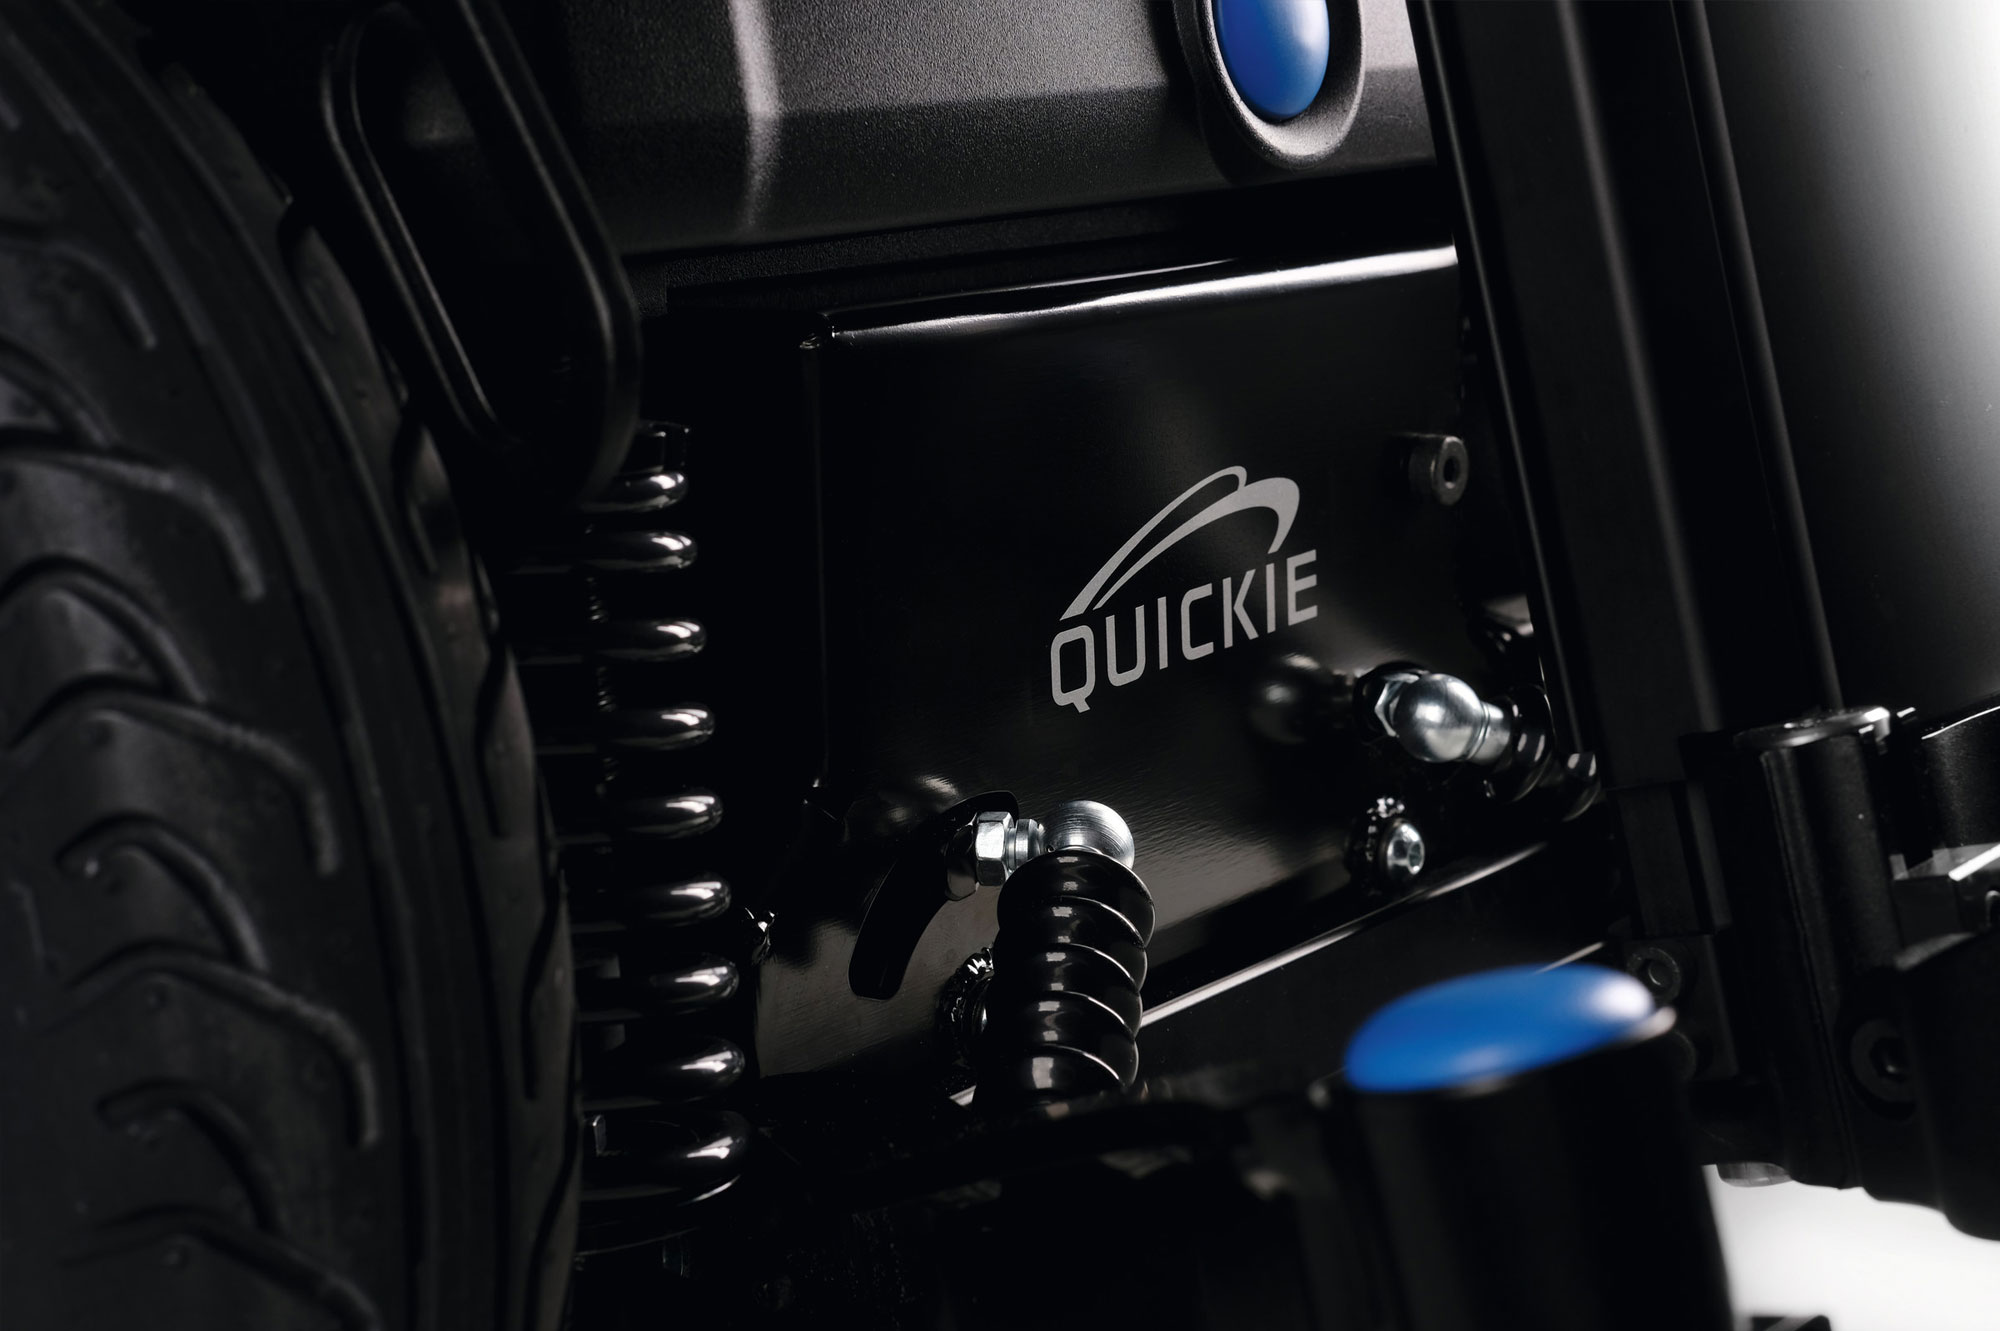 Quickie Q700-UP F SEDEO ERGO Standing Wheelchair